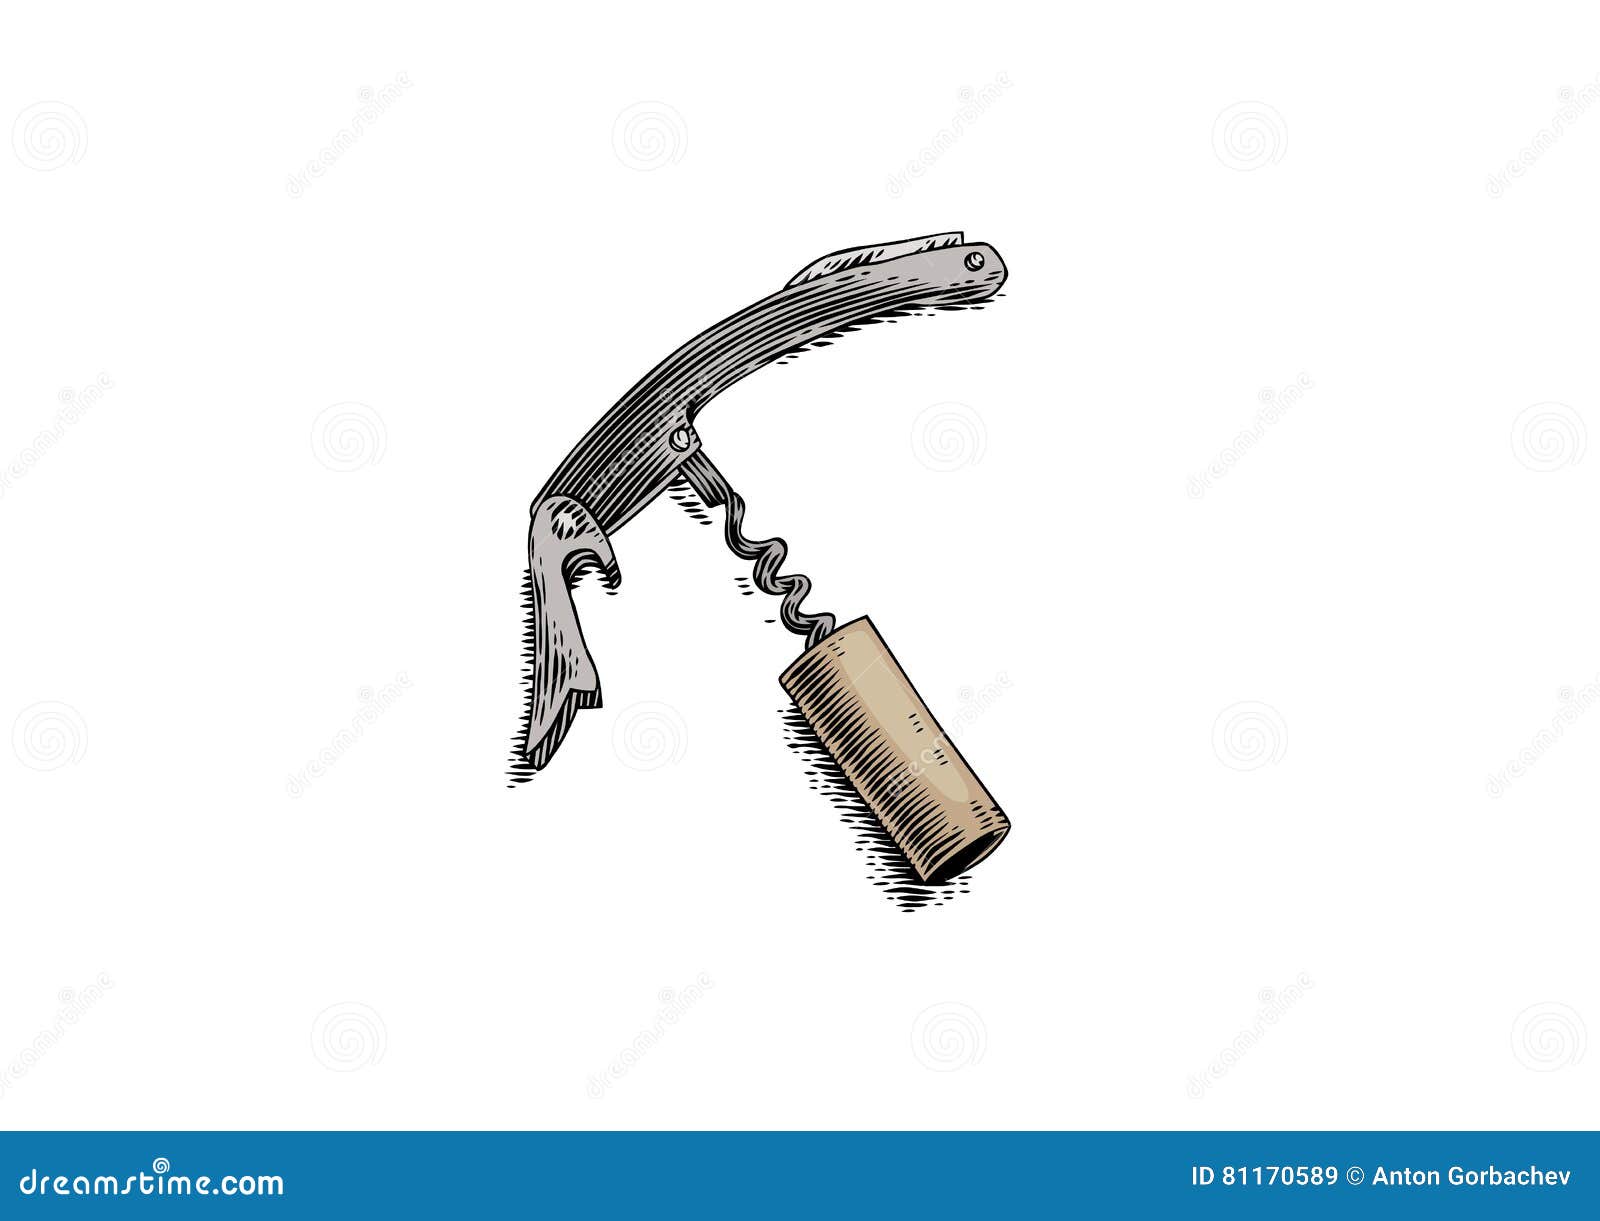 metal corkscrew with cork